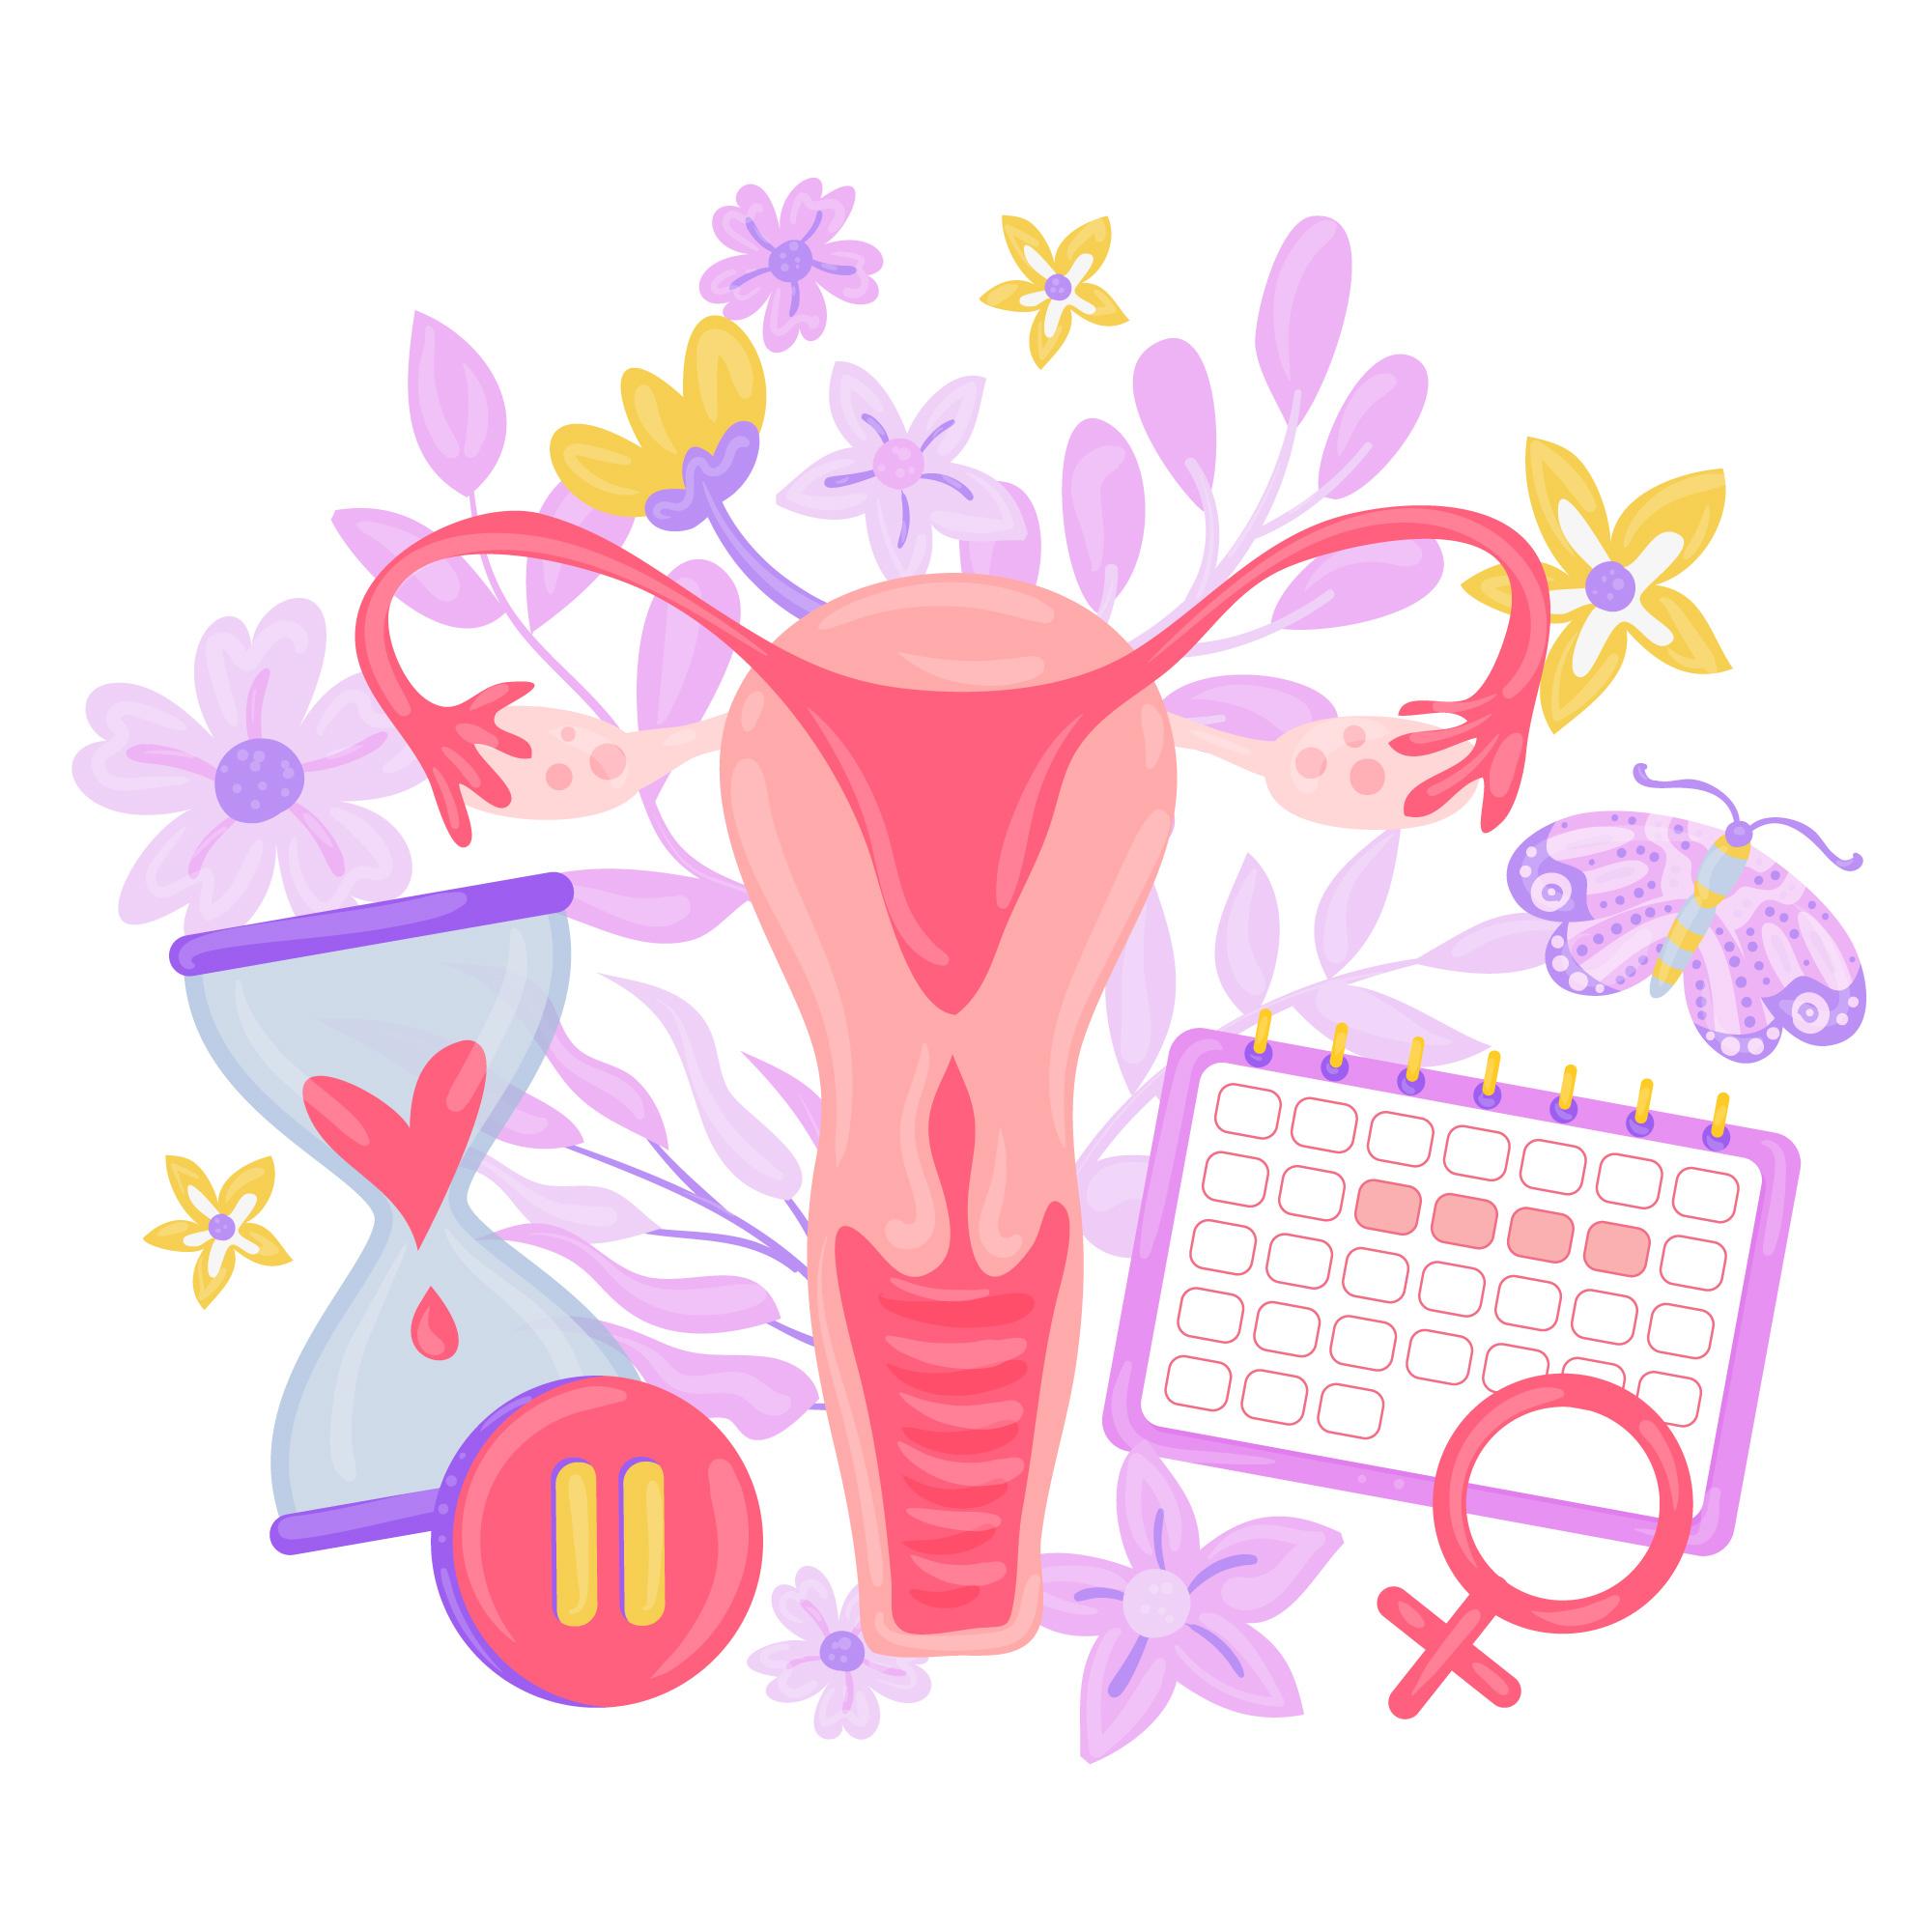 Best IVF Fertility Center in Andhra Pradesh